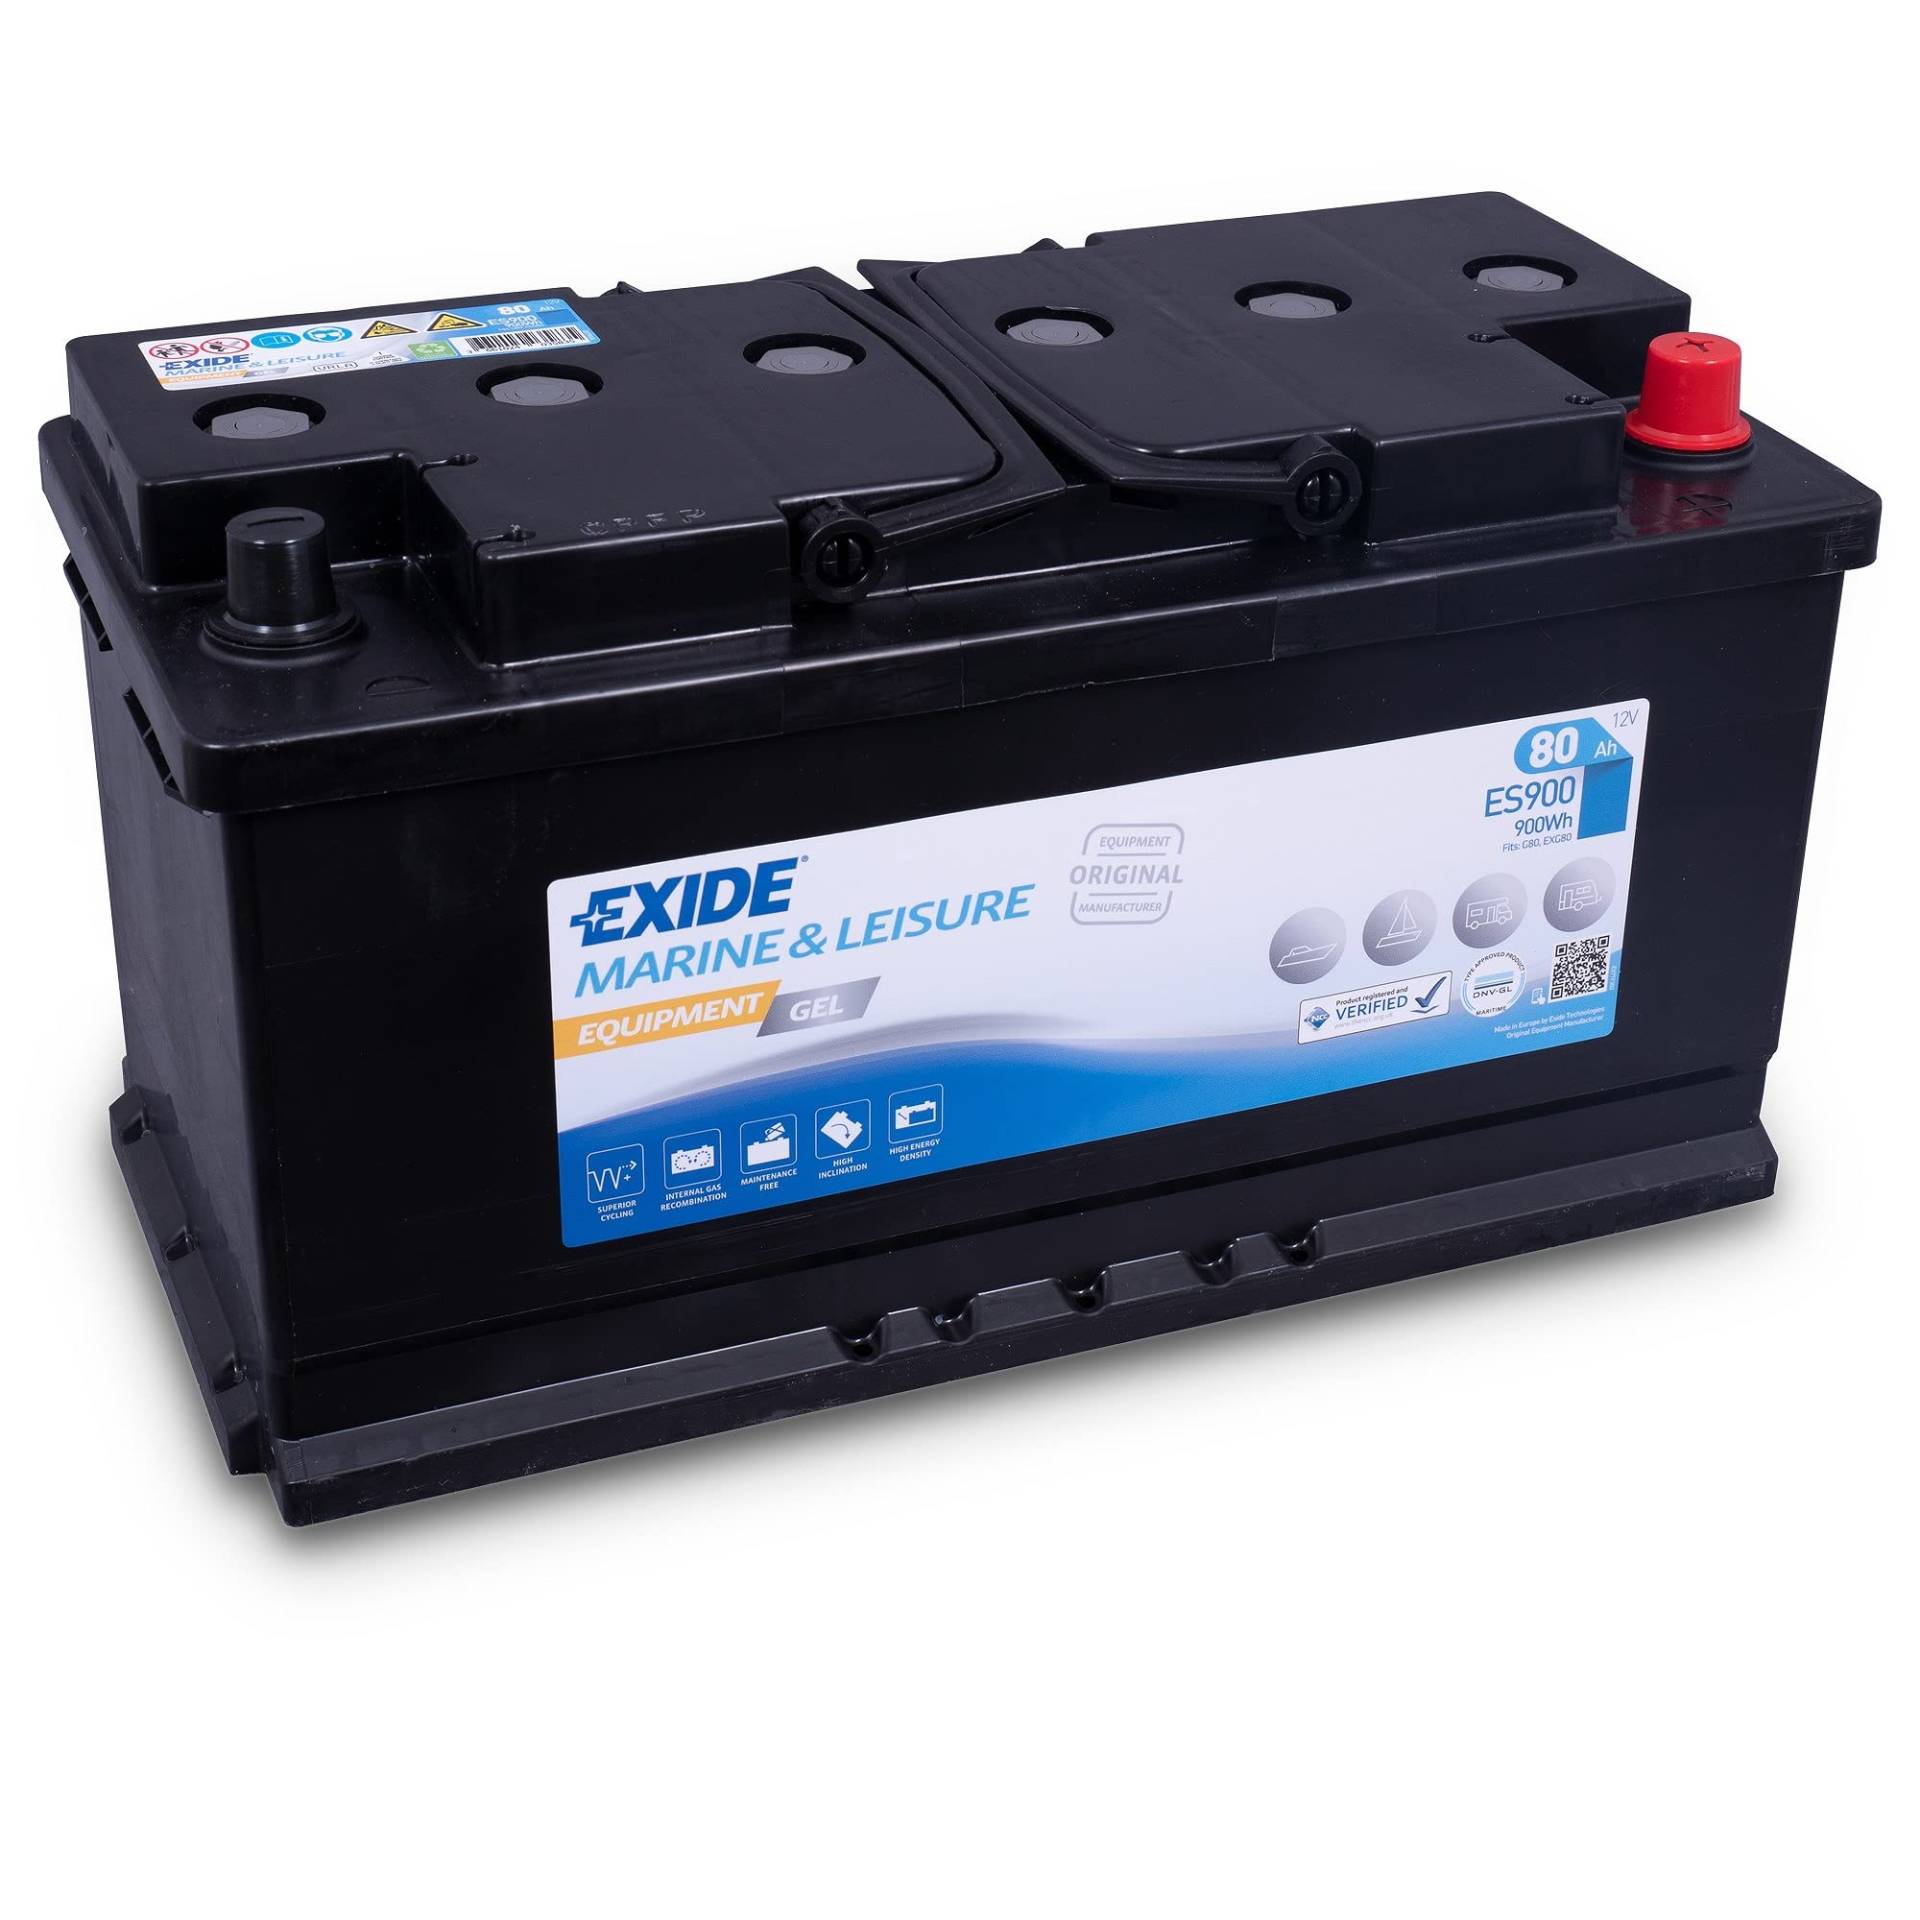 Exide Equipment Batterie GEL ES 900 von Exide